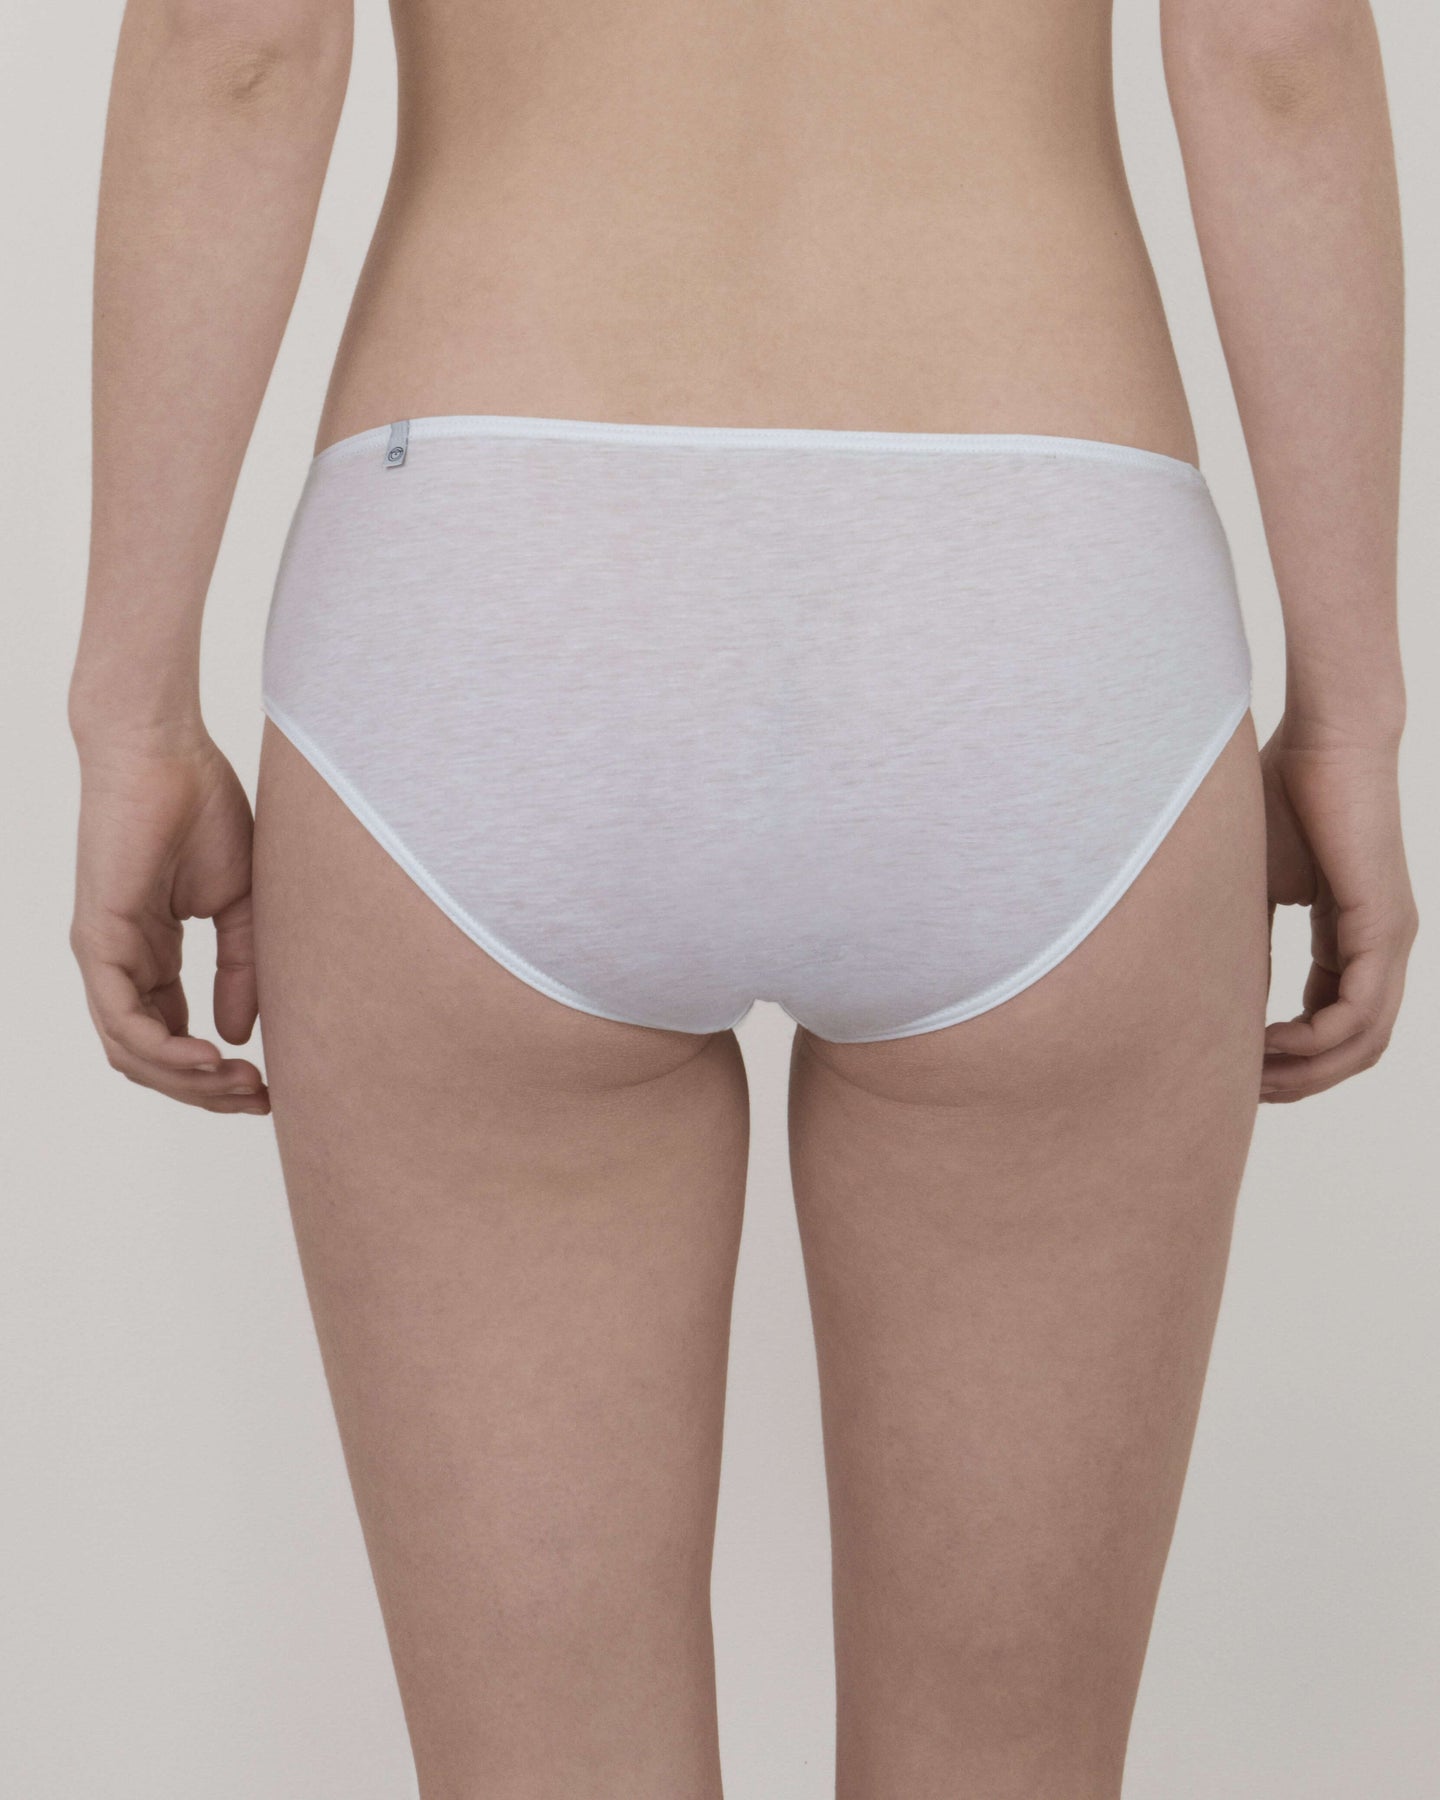 OPIBOO Women's Cotton Underwear,Soft Tummy Colombia